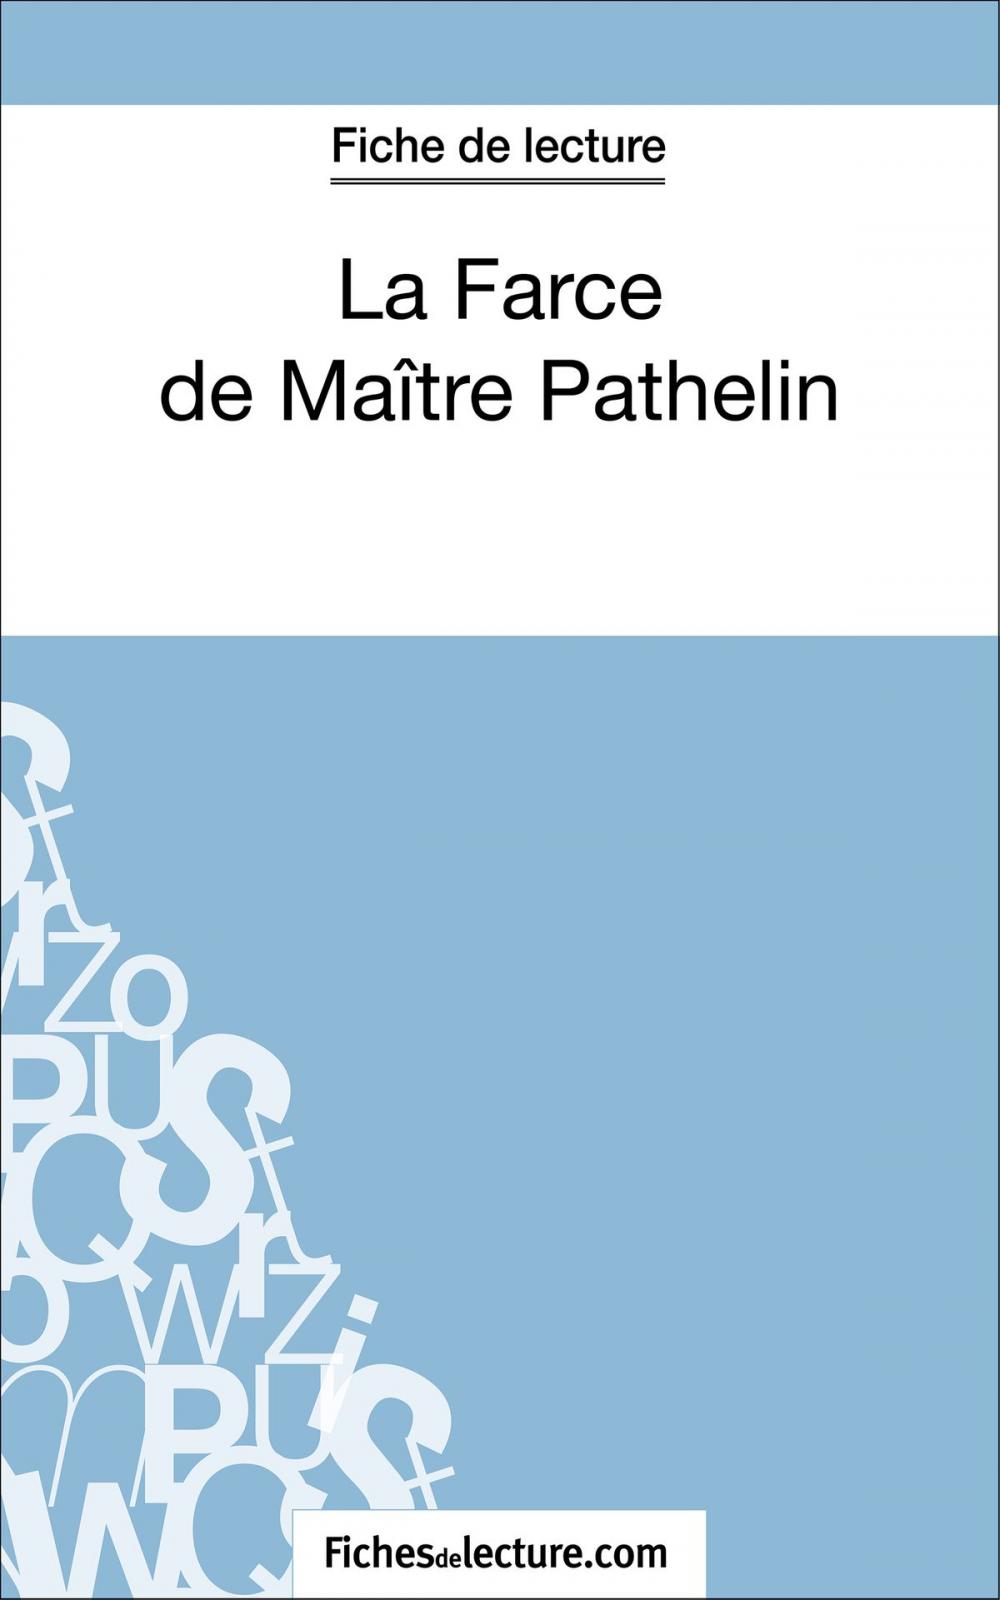 Big bigCover of La Farce de Maître Pathelin (Fiche de lecture)